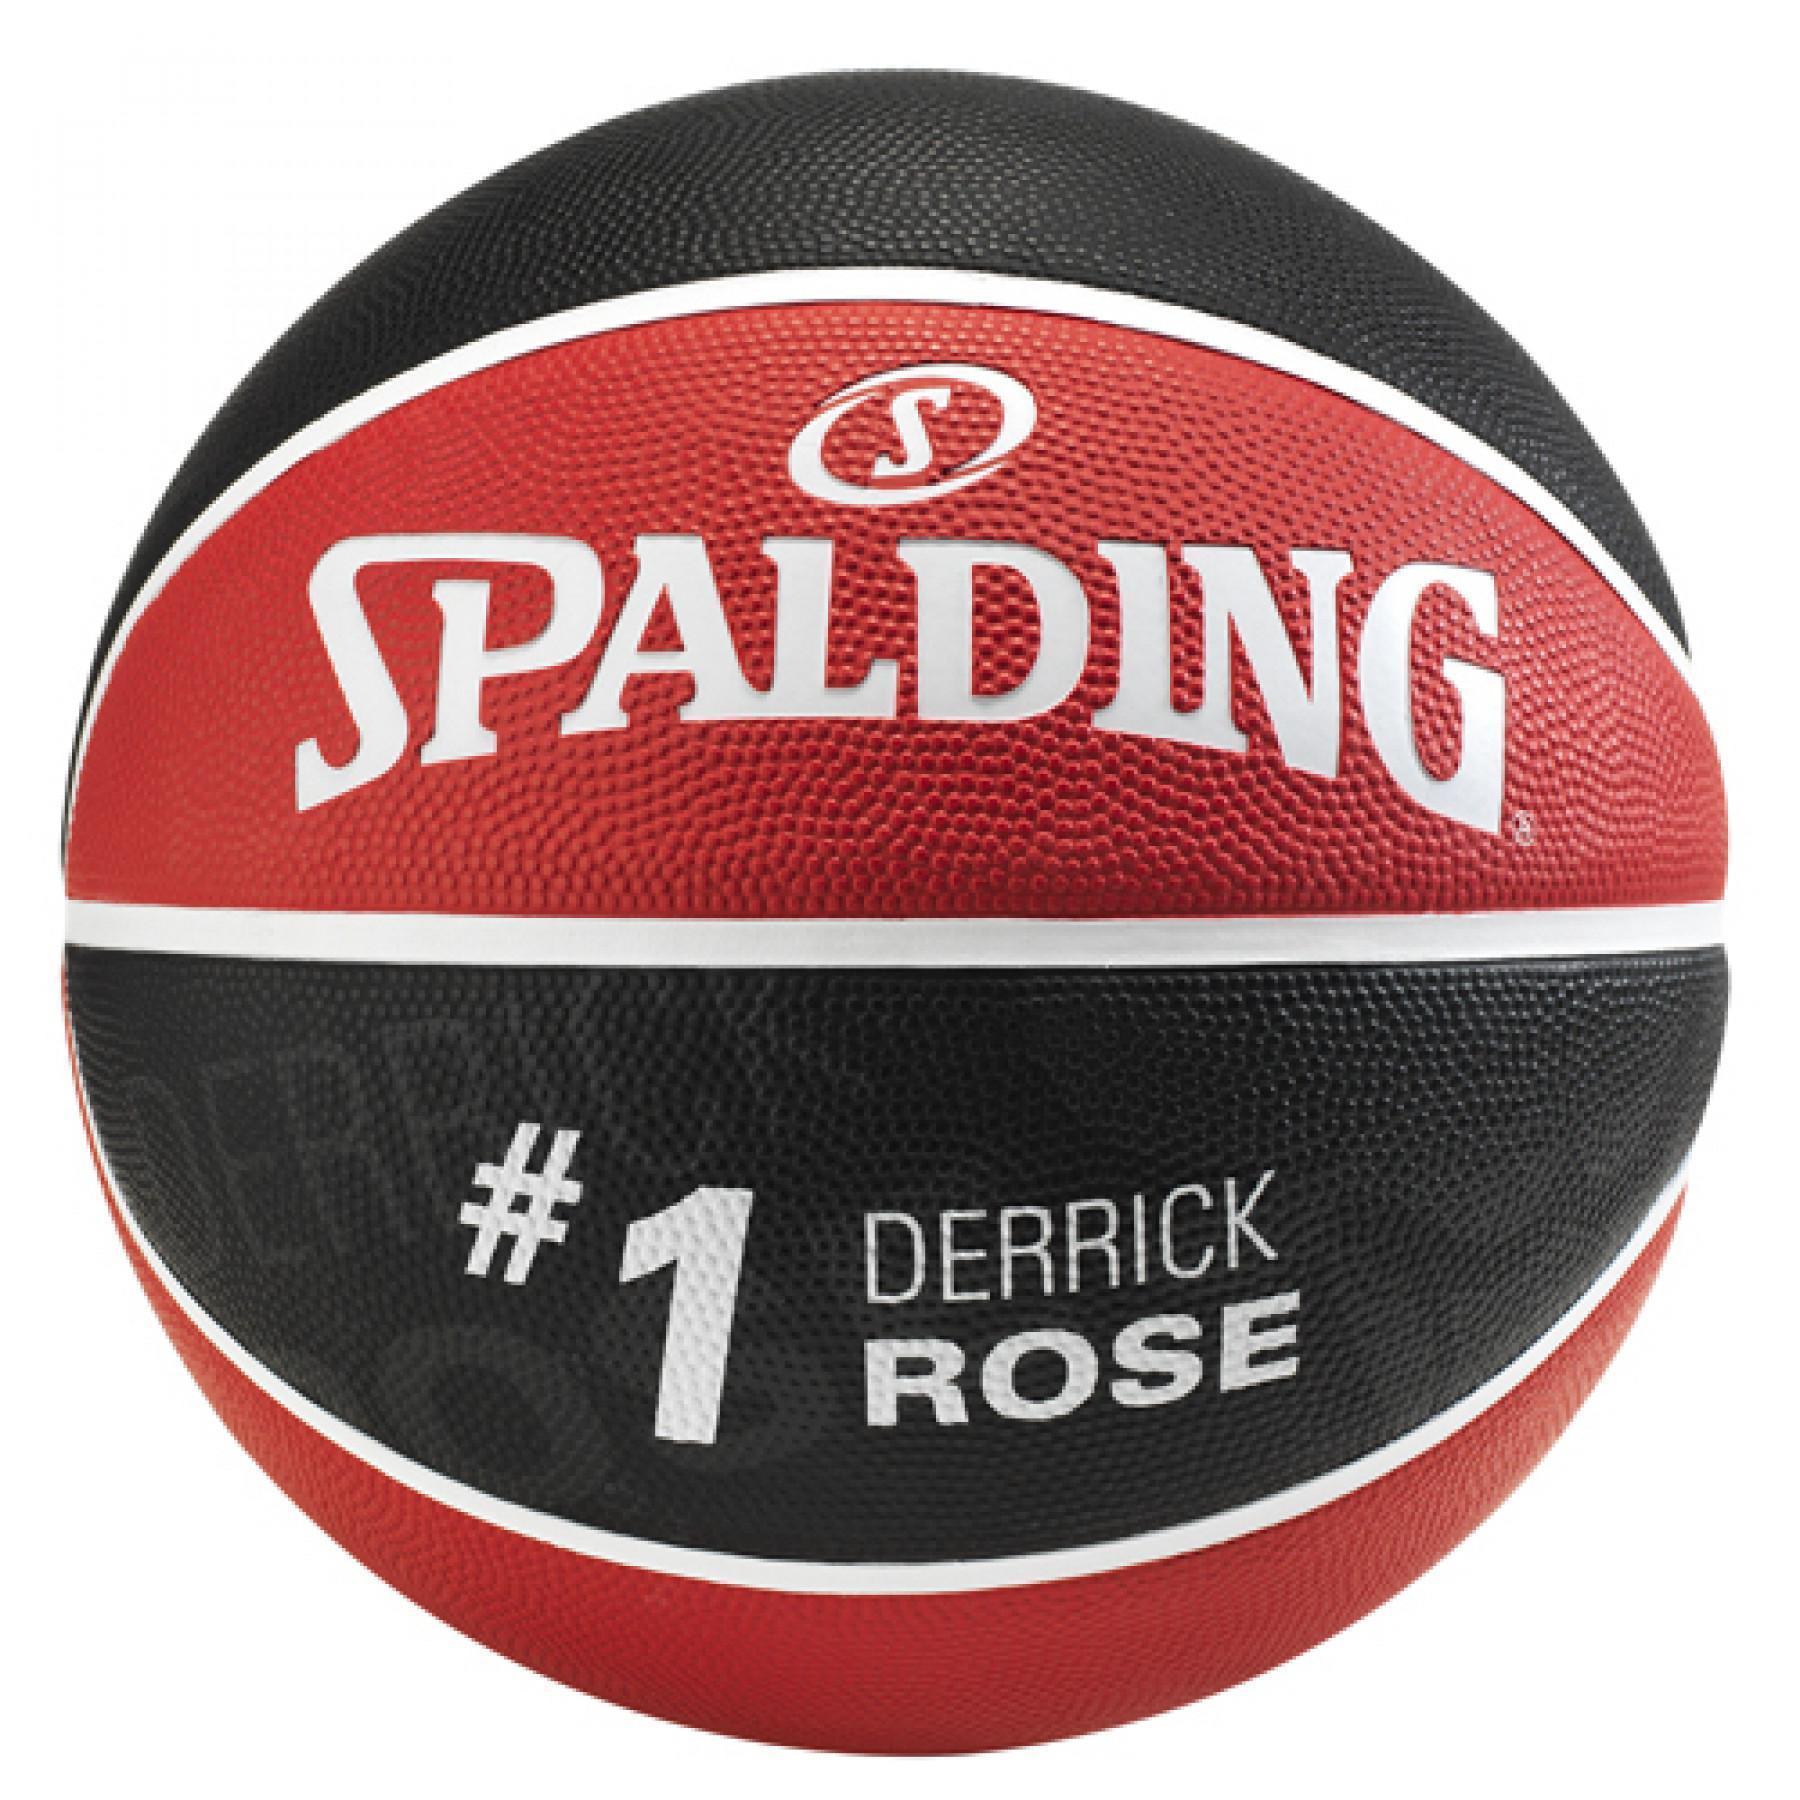 Ballon Spalding Player Derrick Rose